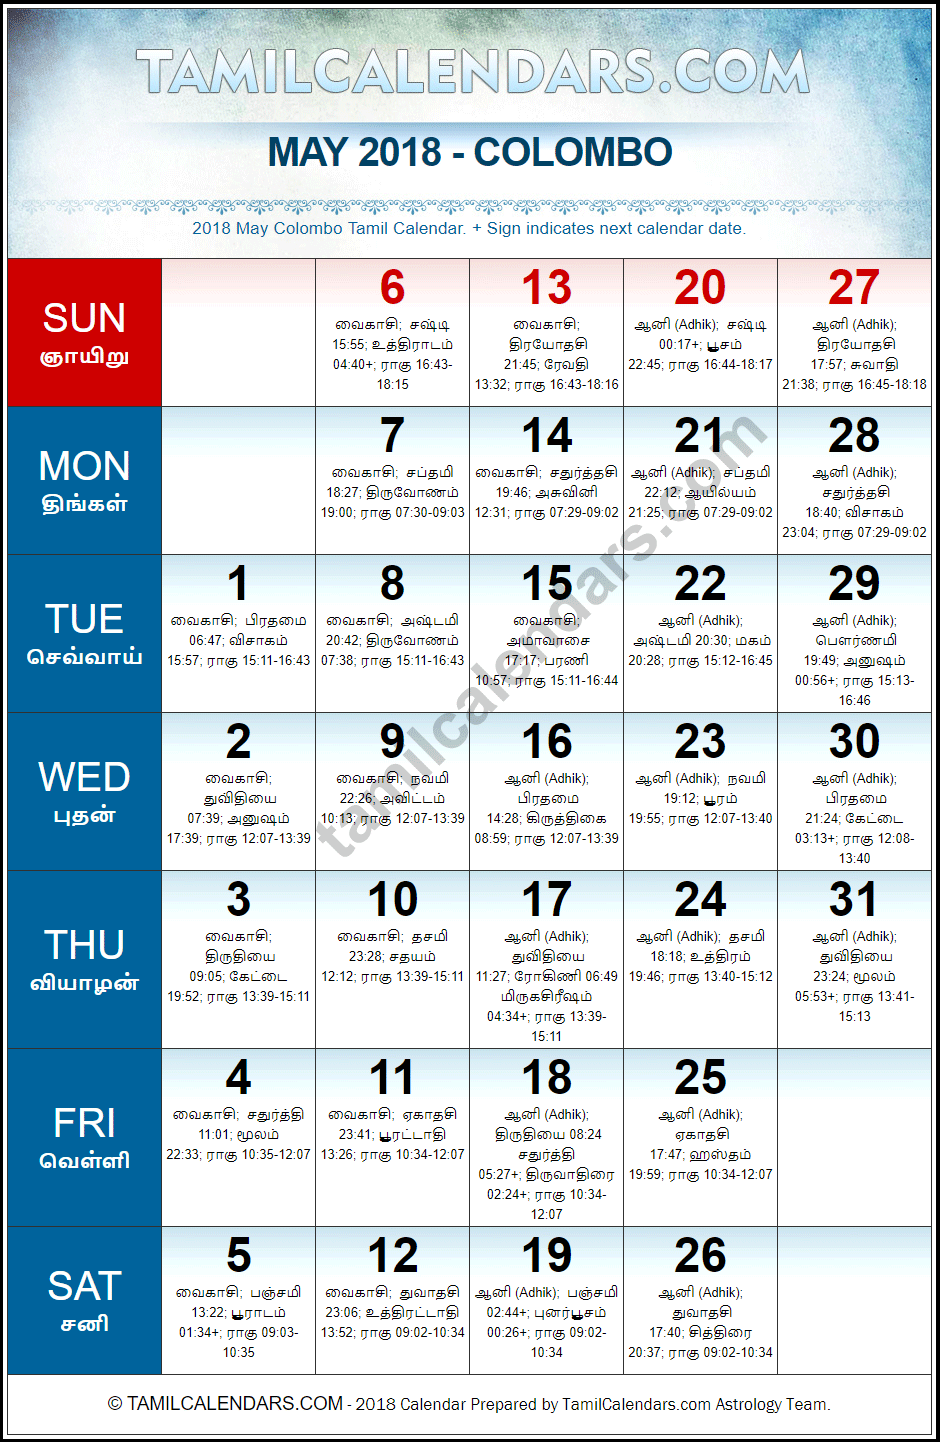 May 2018 Tamil Calendar for Sri Lanka (Colombo)